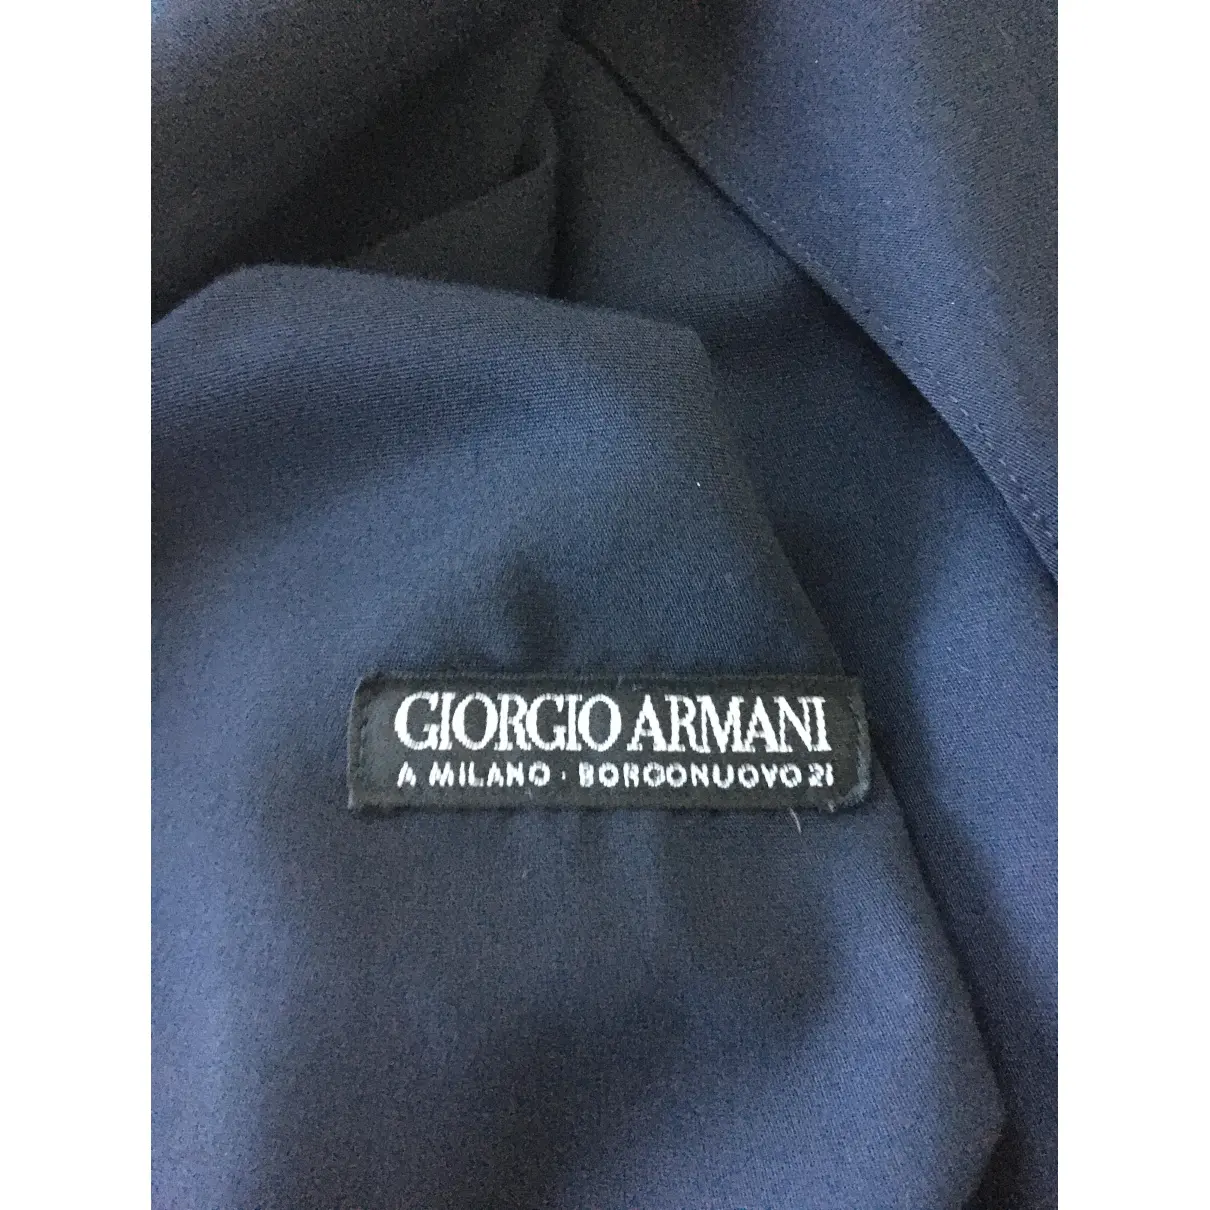 Buy Giorgio Armani Wool trench coat online